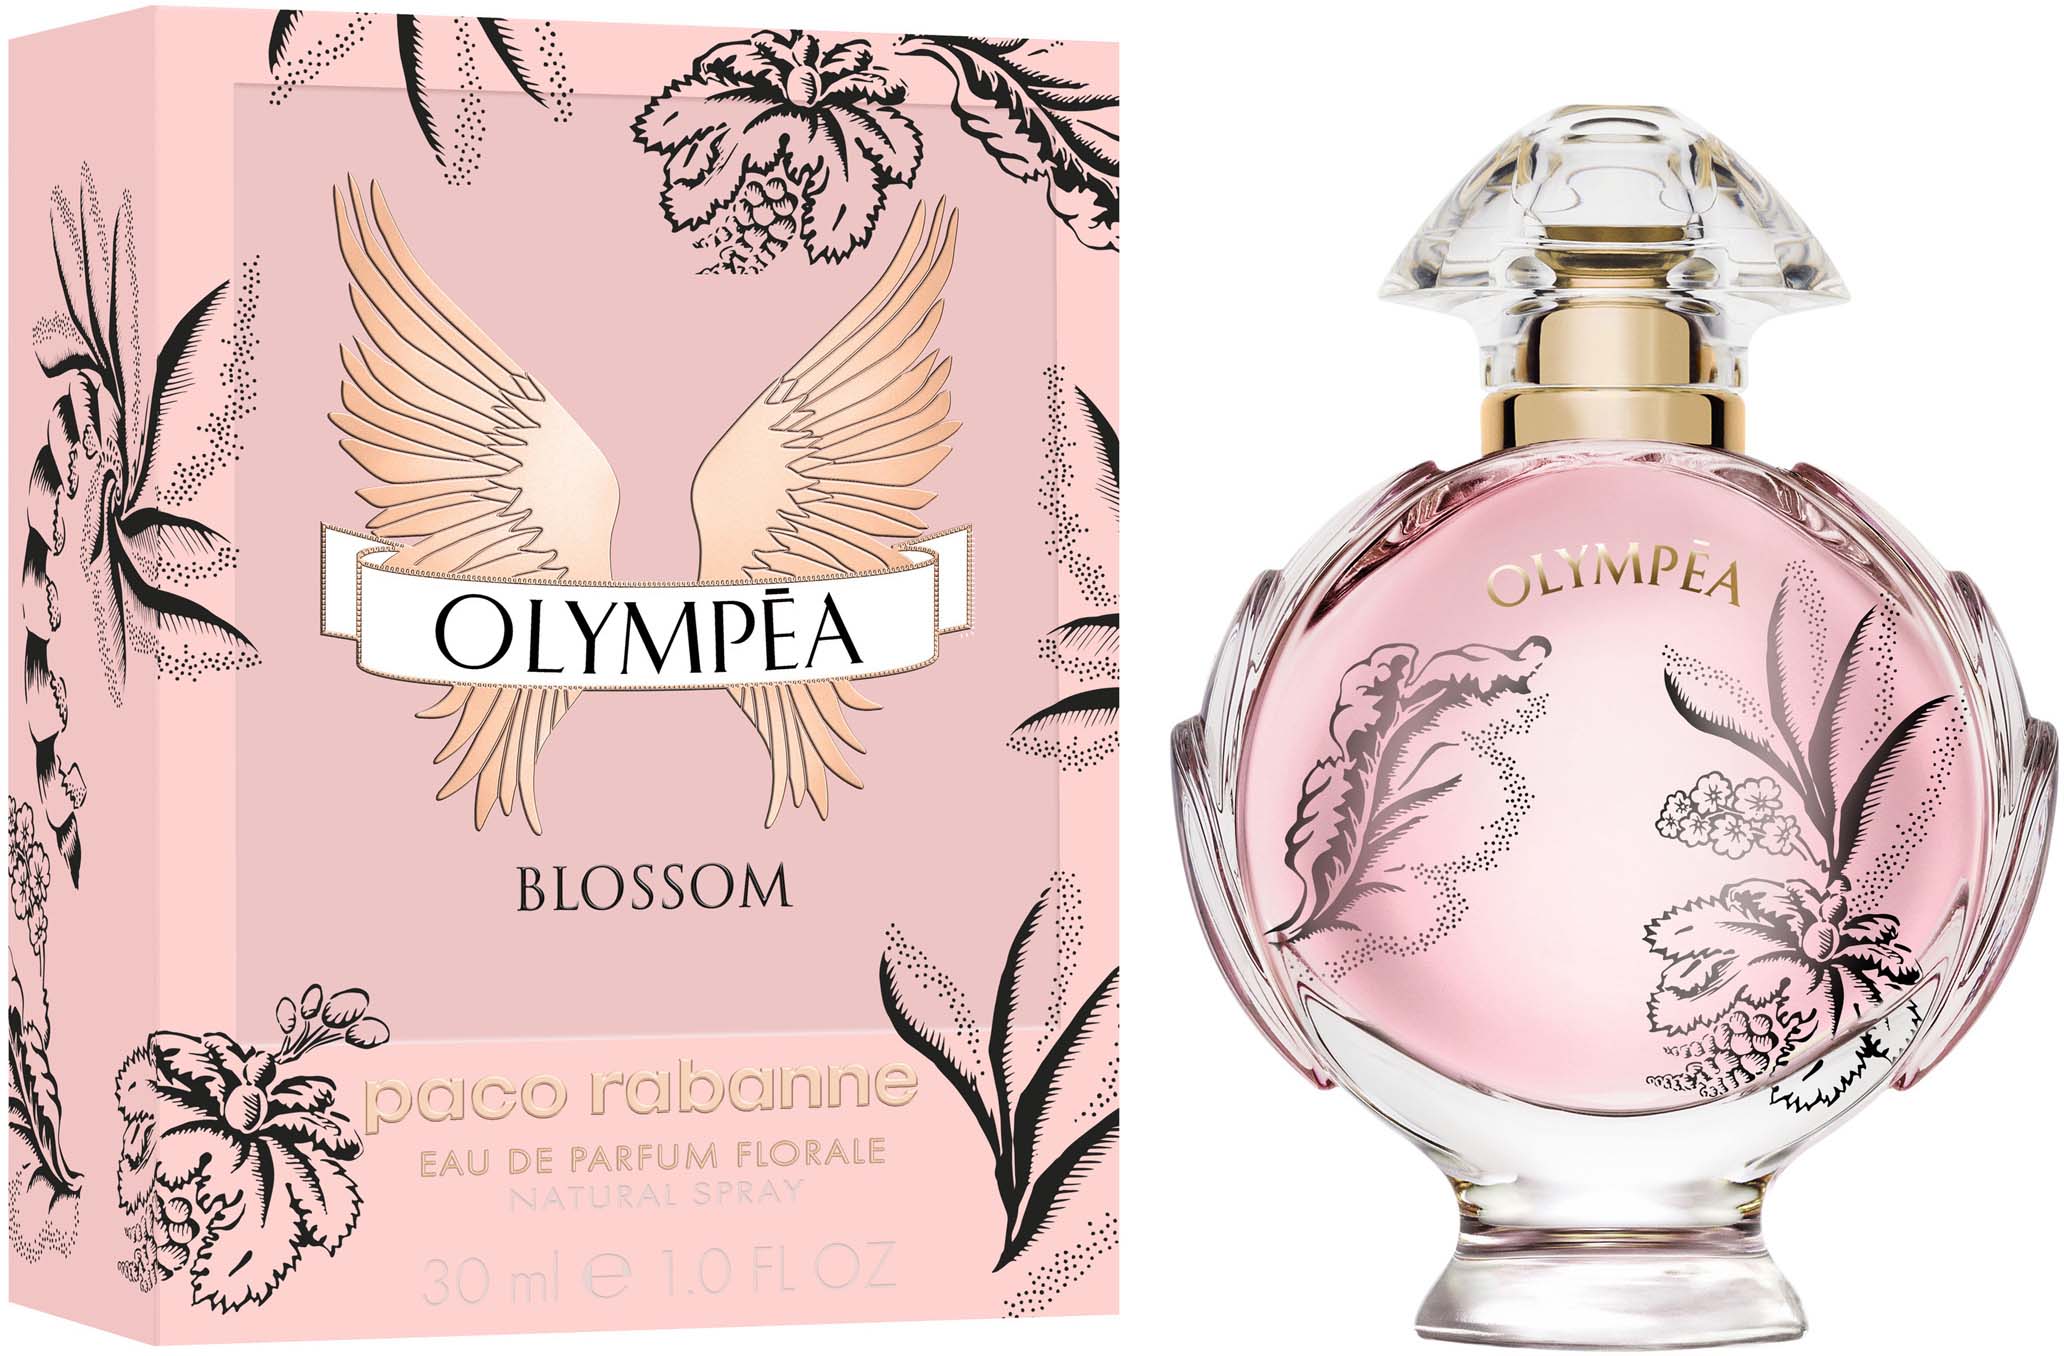 Rabanne Olympéa Blossom Eau de ml 30 Parfum